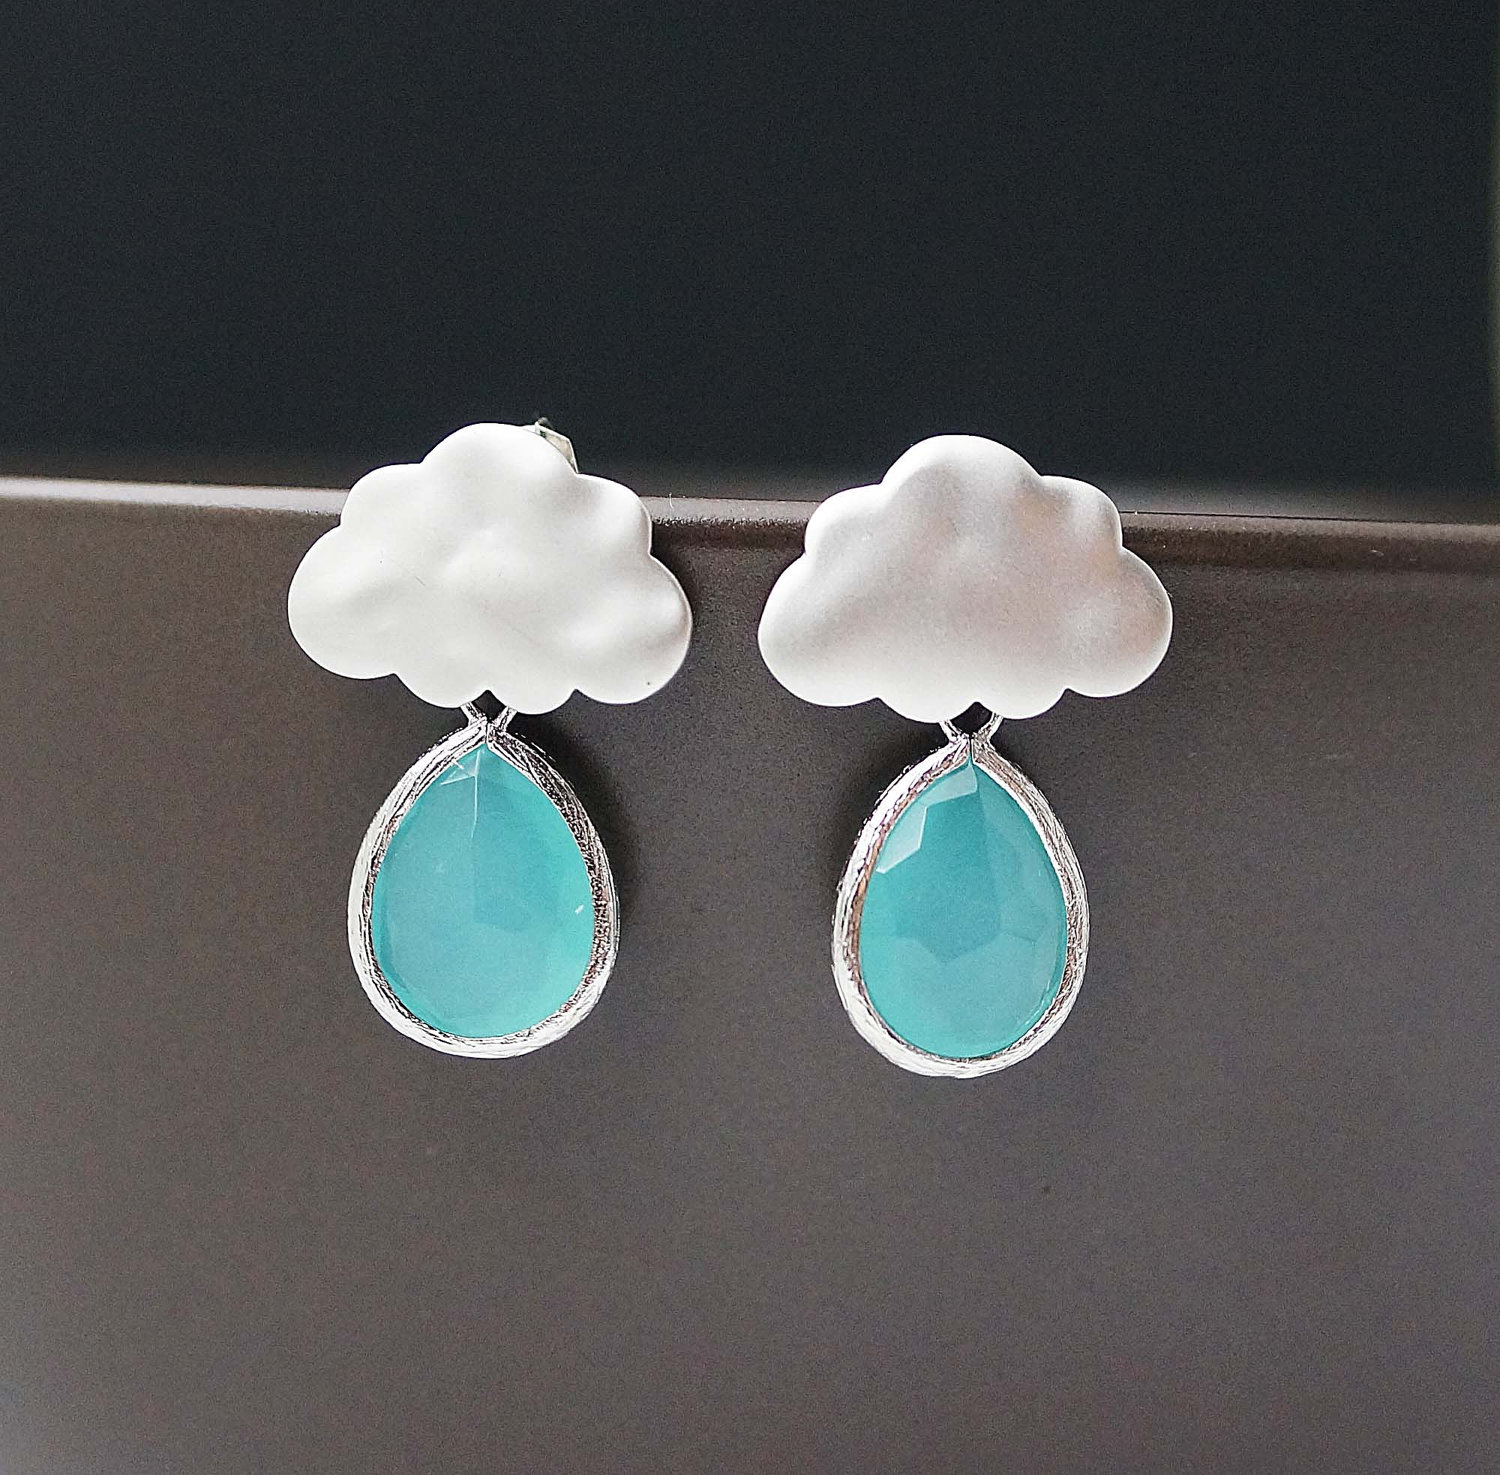 Rain Drops And Cloud Earrings Matte Silver Finish Rain Cloud Ear Posts And Sea Foam Mint Opal